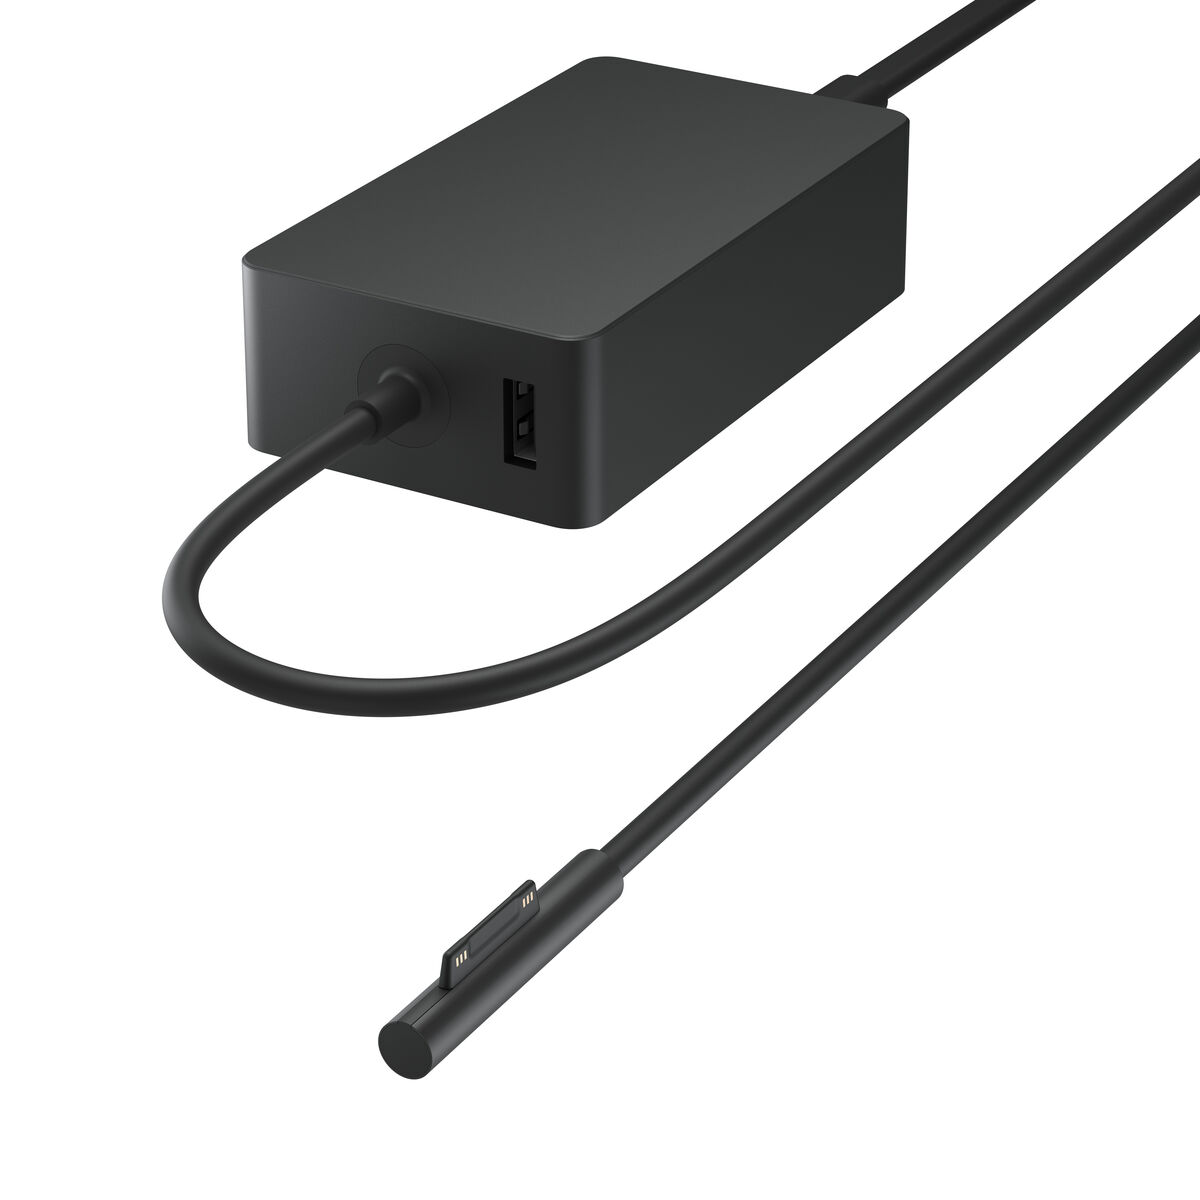 Power supply Microsoft US7-00006 USB USB 2.0